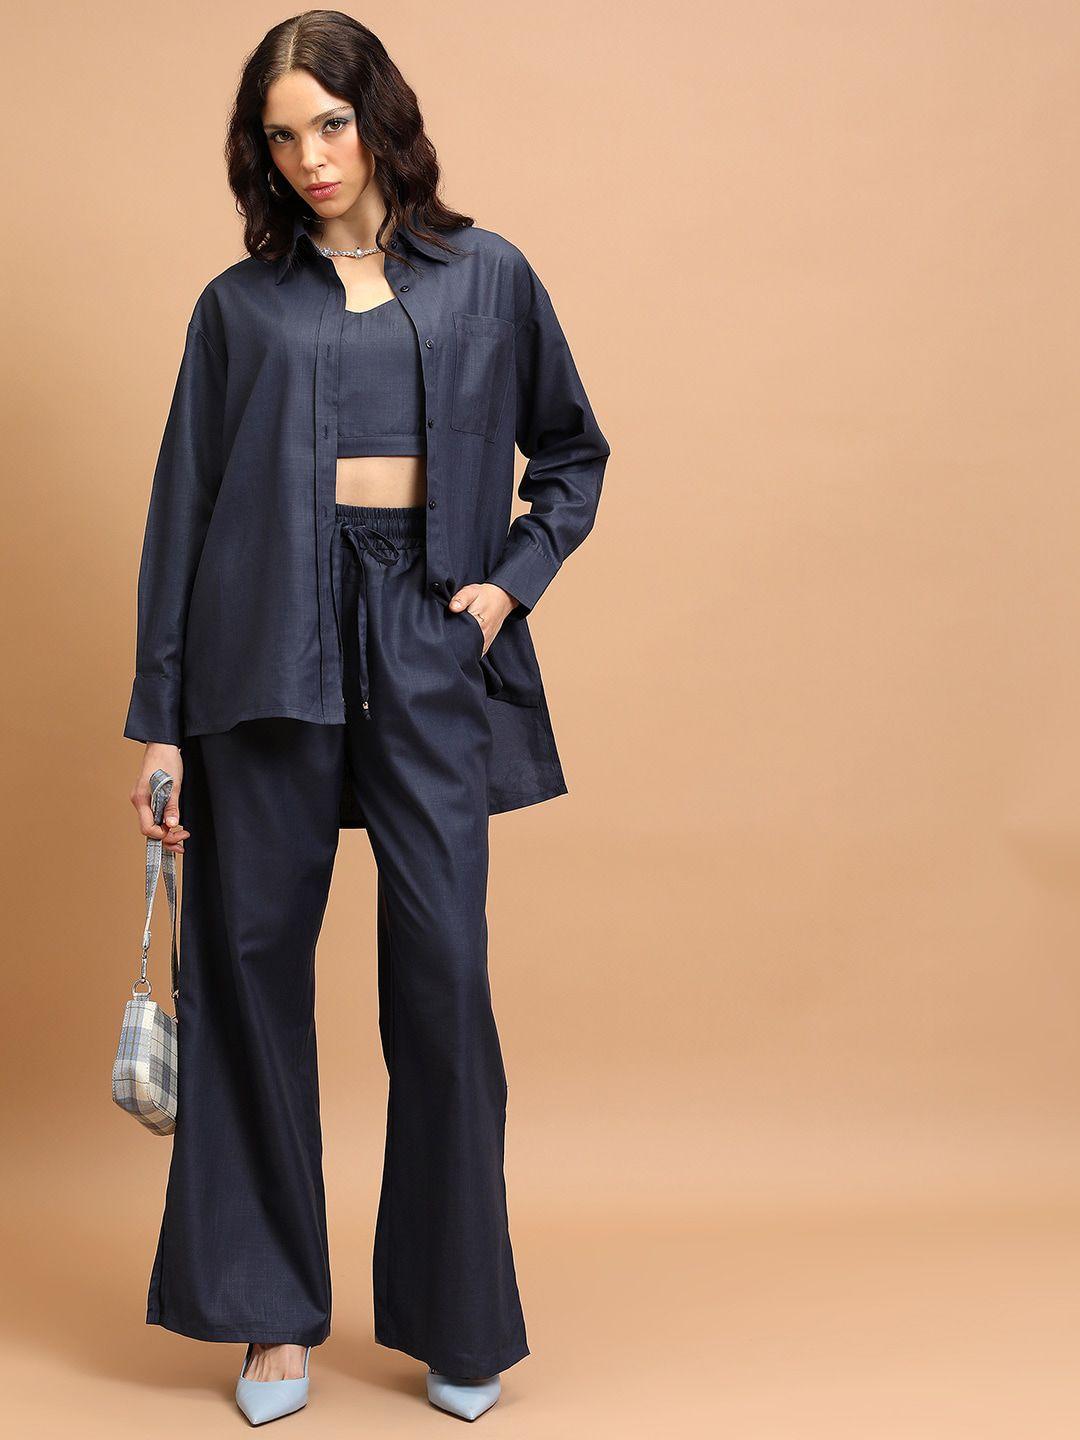 tokyo talkies navy blue shoulder straps crop top & trouser with shirt